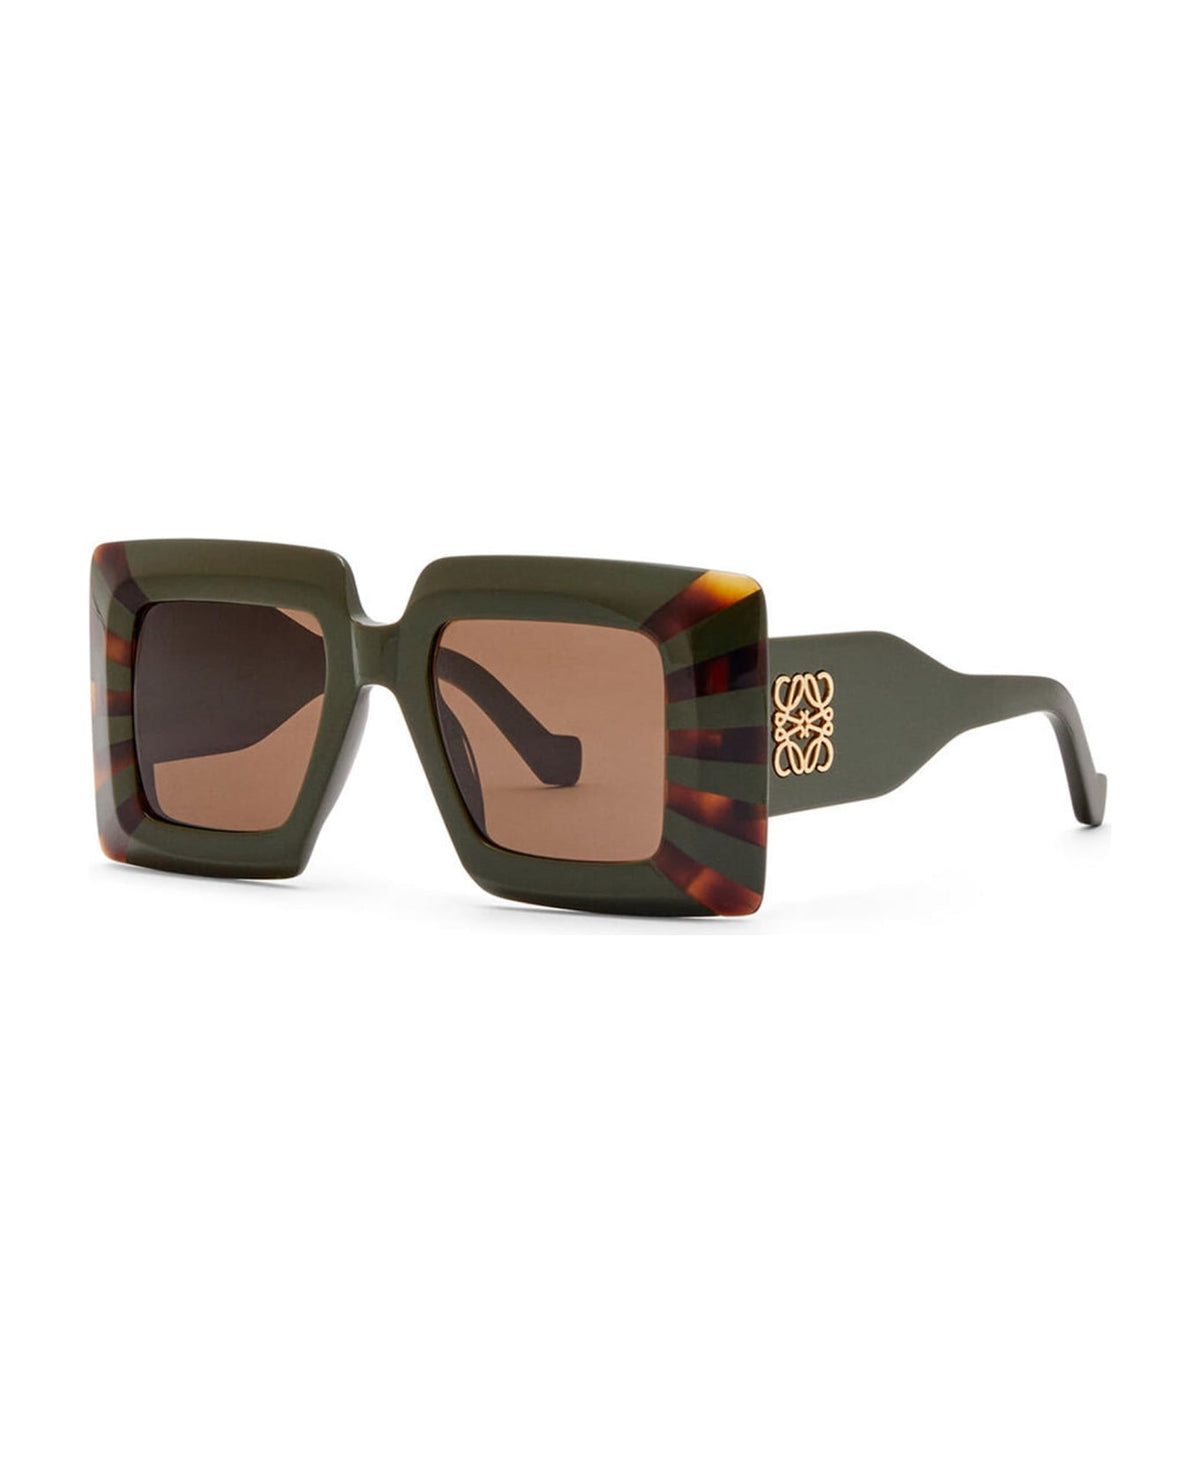 Lw40090i - Kakhi / Havana Sunglasses